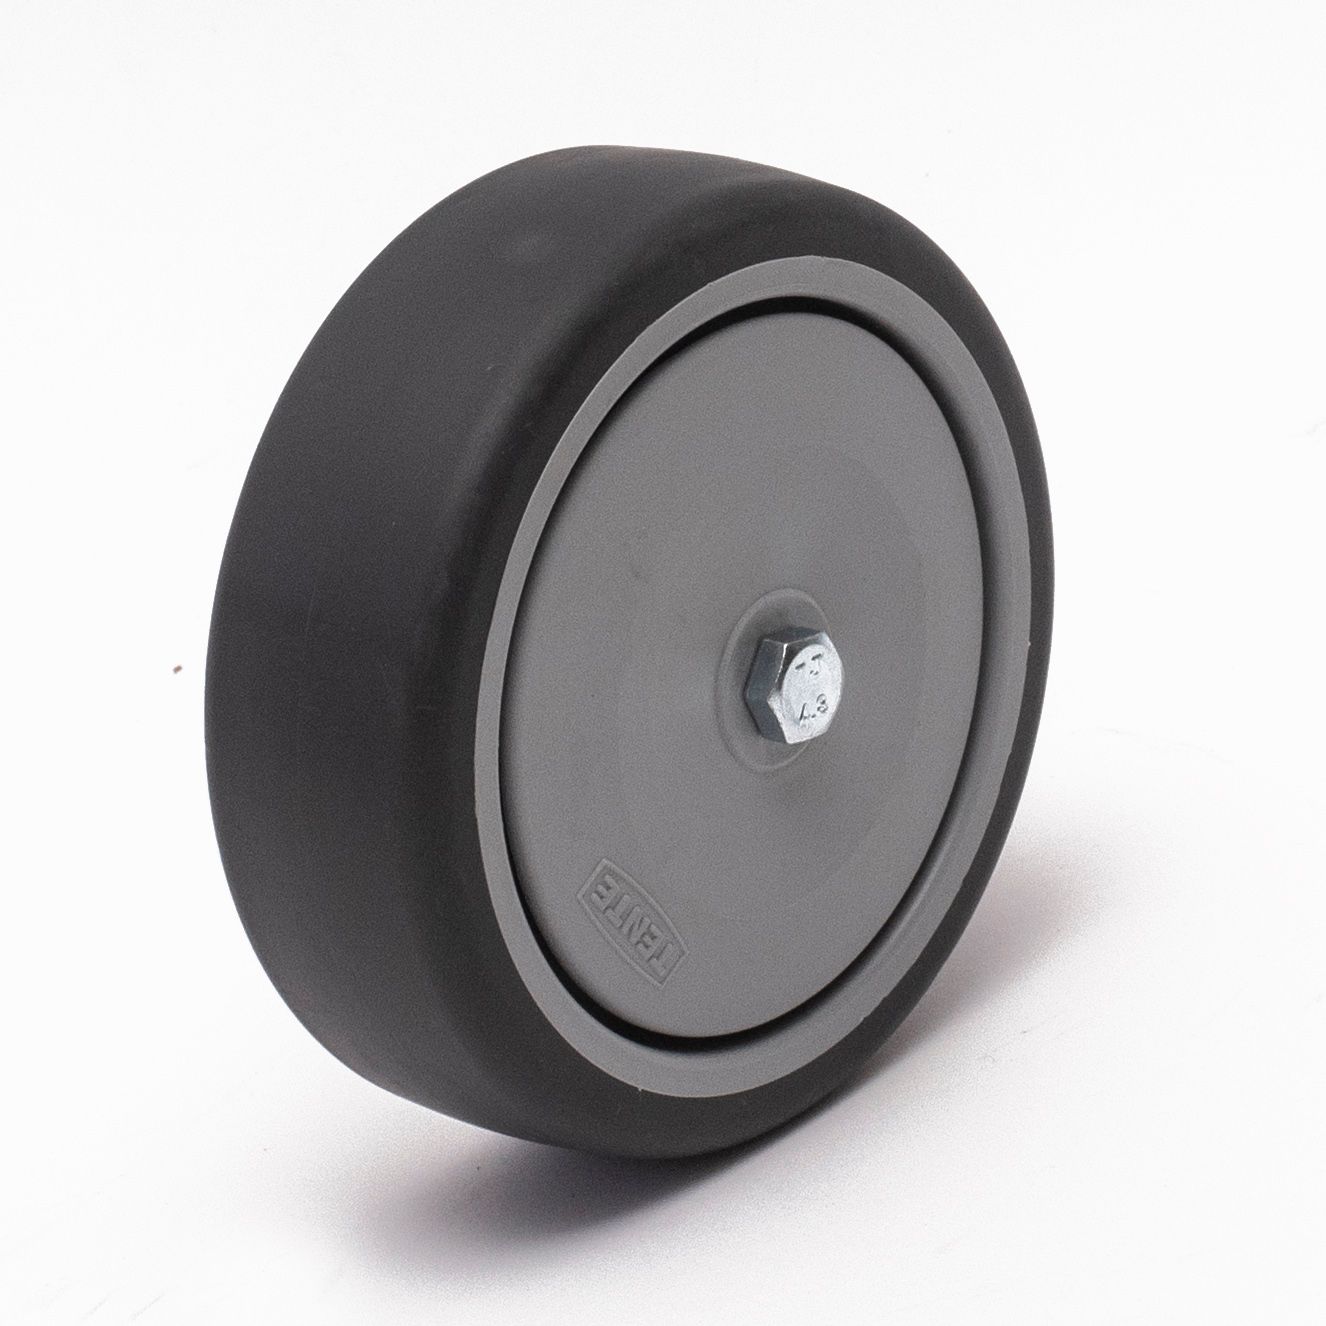 PJP – Thermoplastic rubber castor wheel